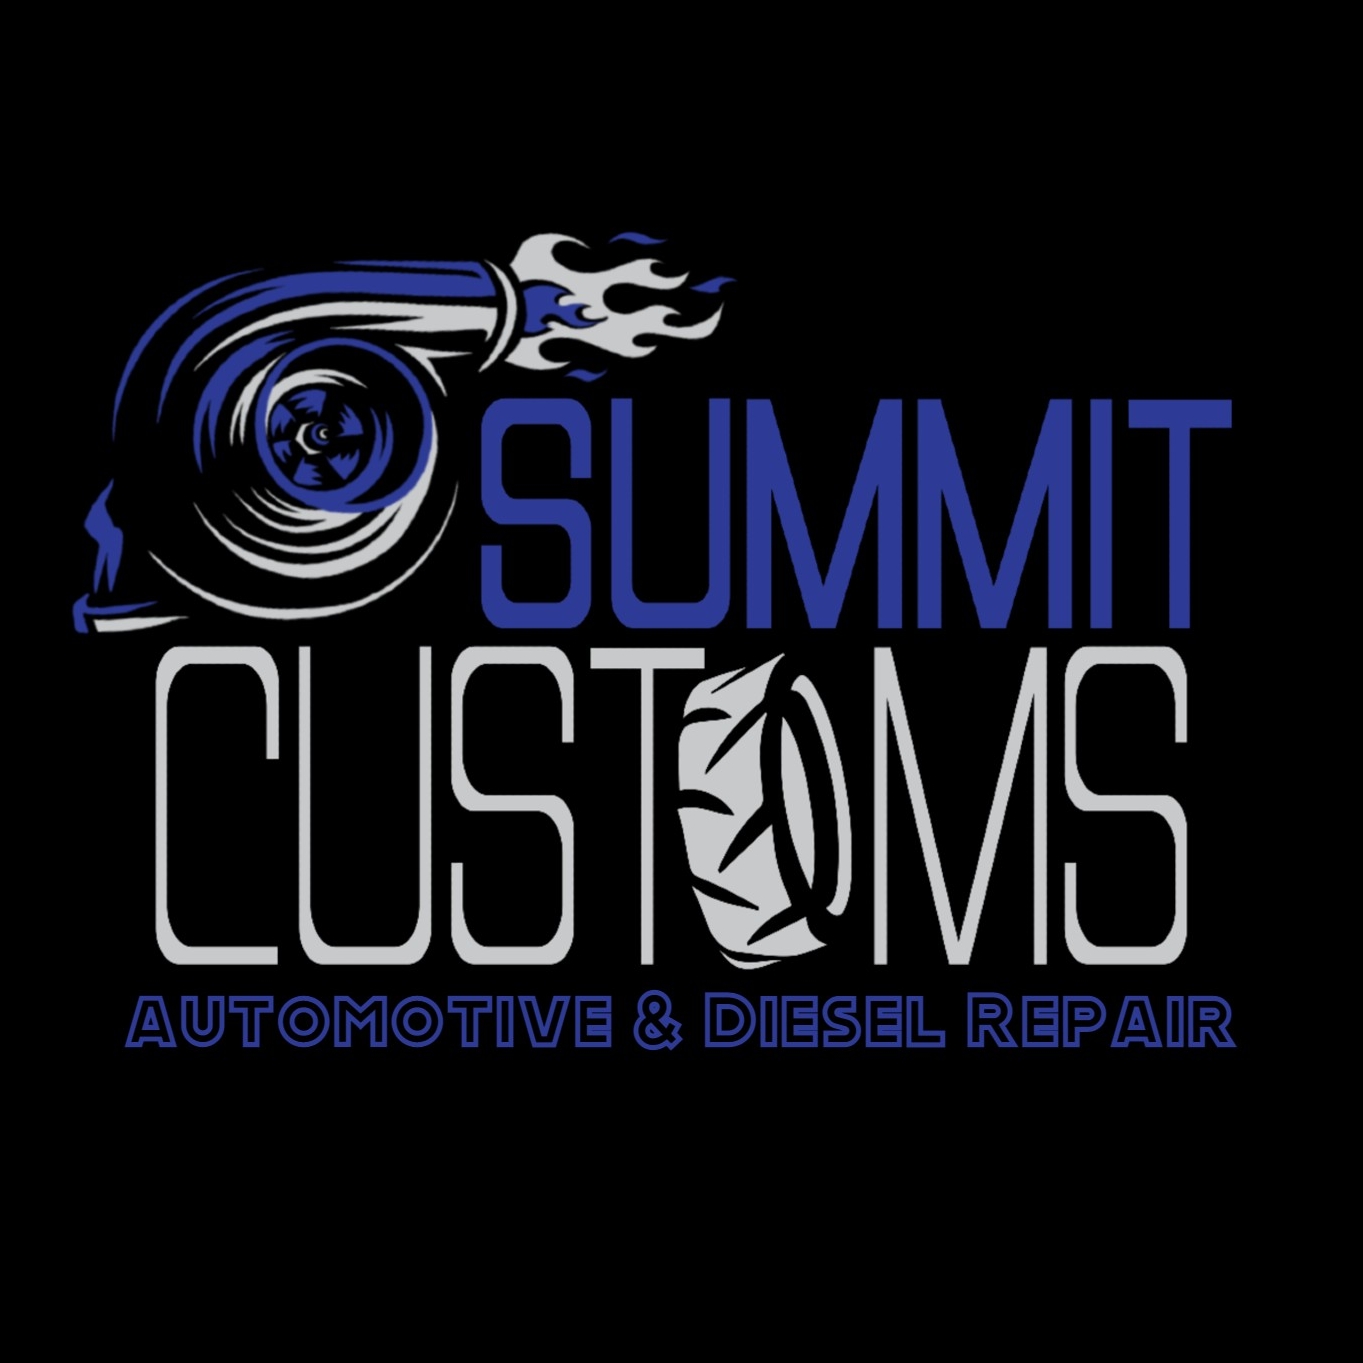 Summit Customs Auto & Diesel Repair 5434 Portage Ave, Headingley Manitoba R4H 1G2